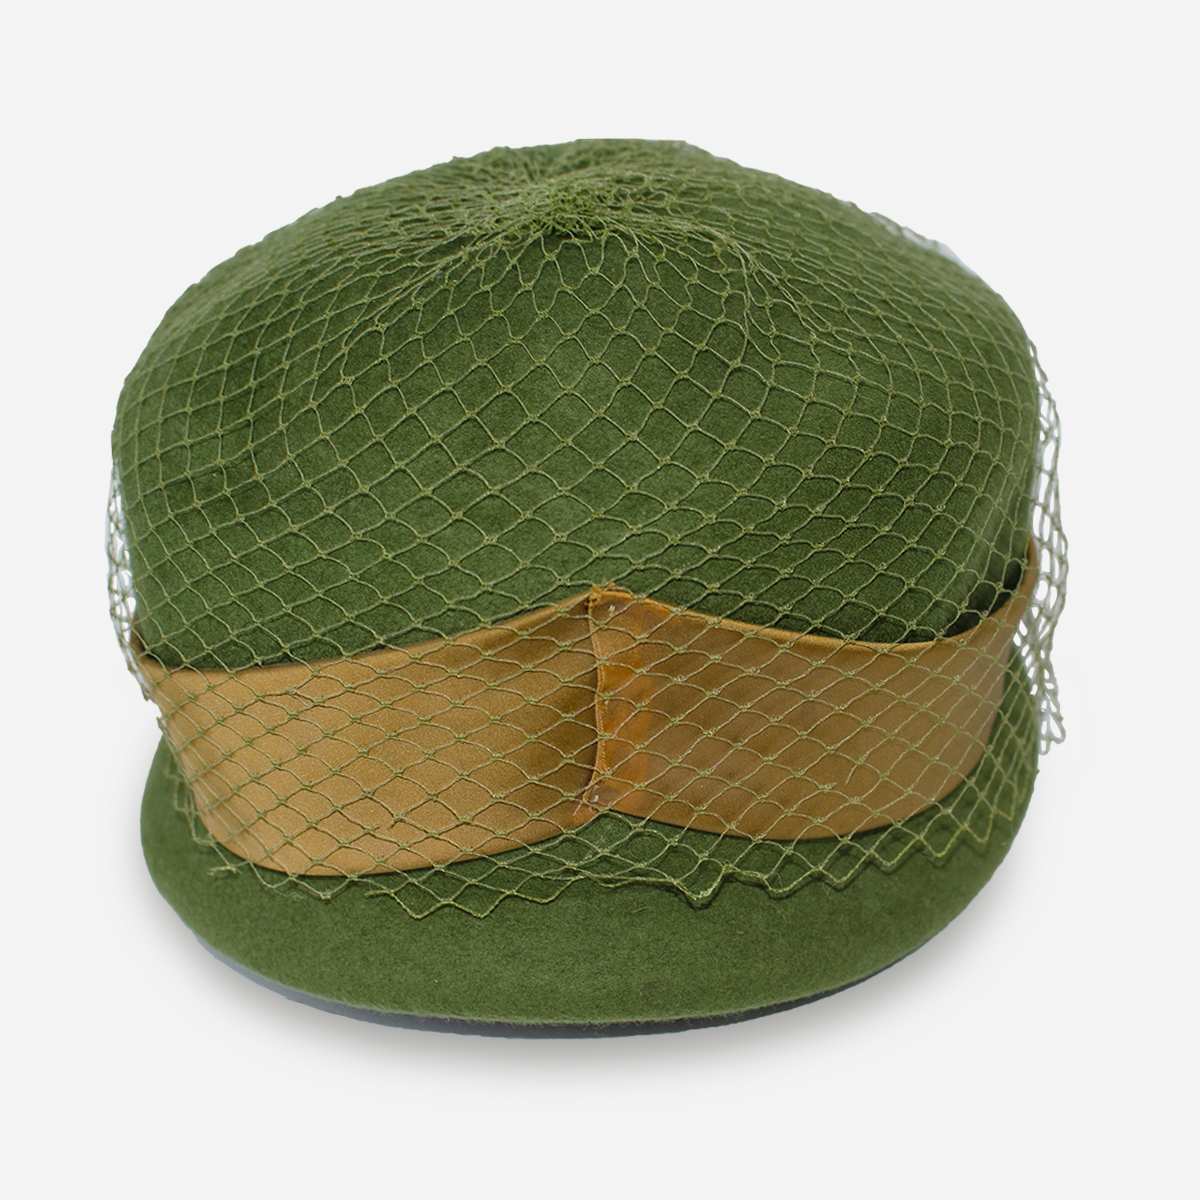 Green cloche hat